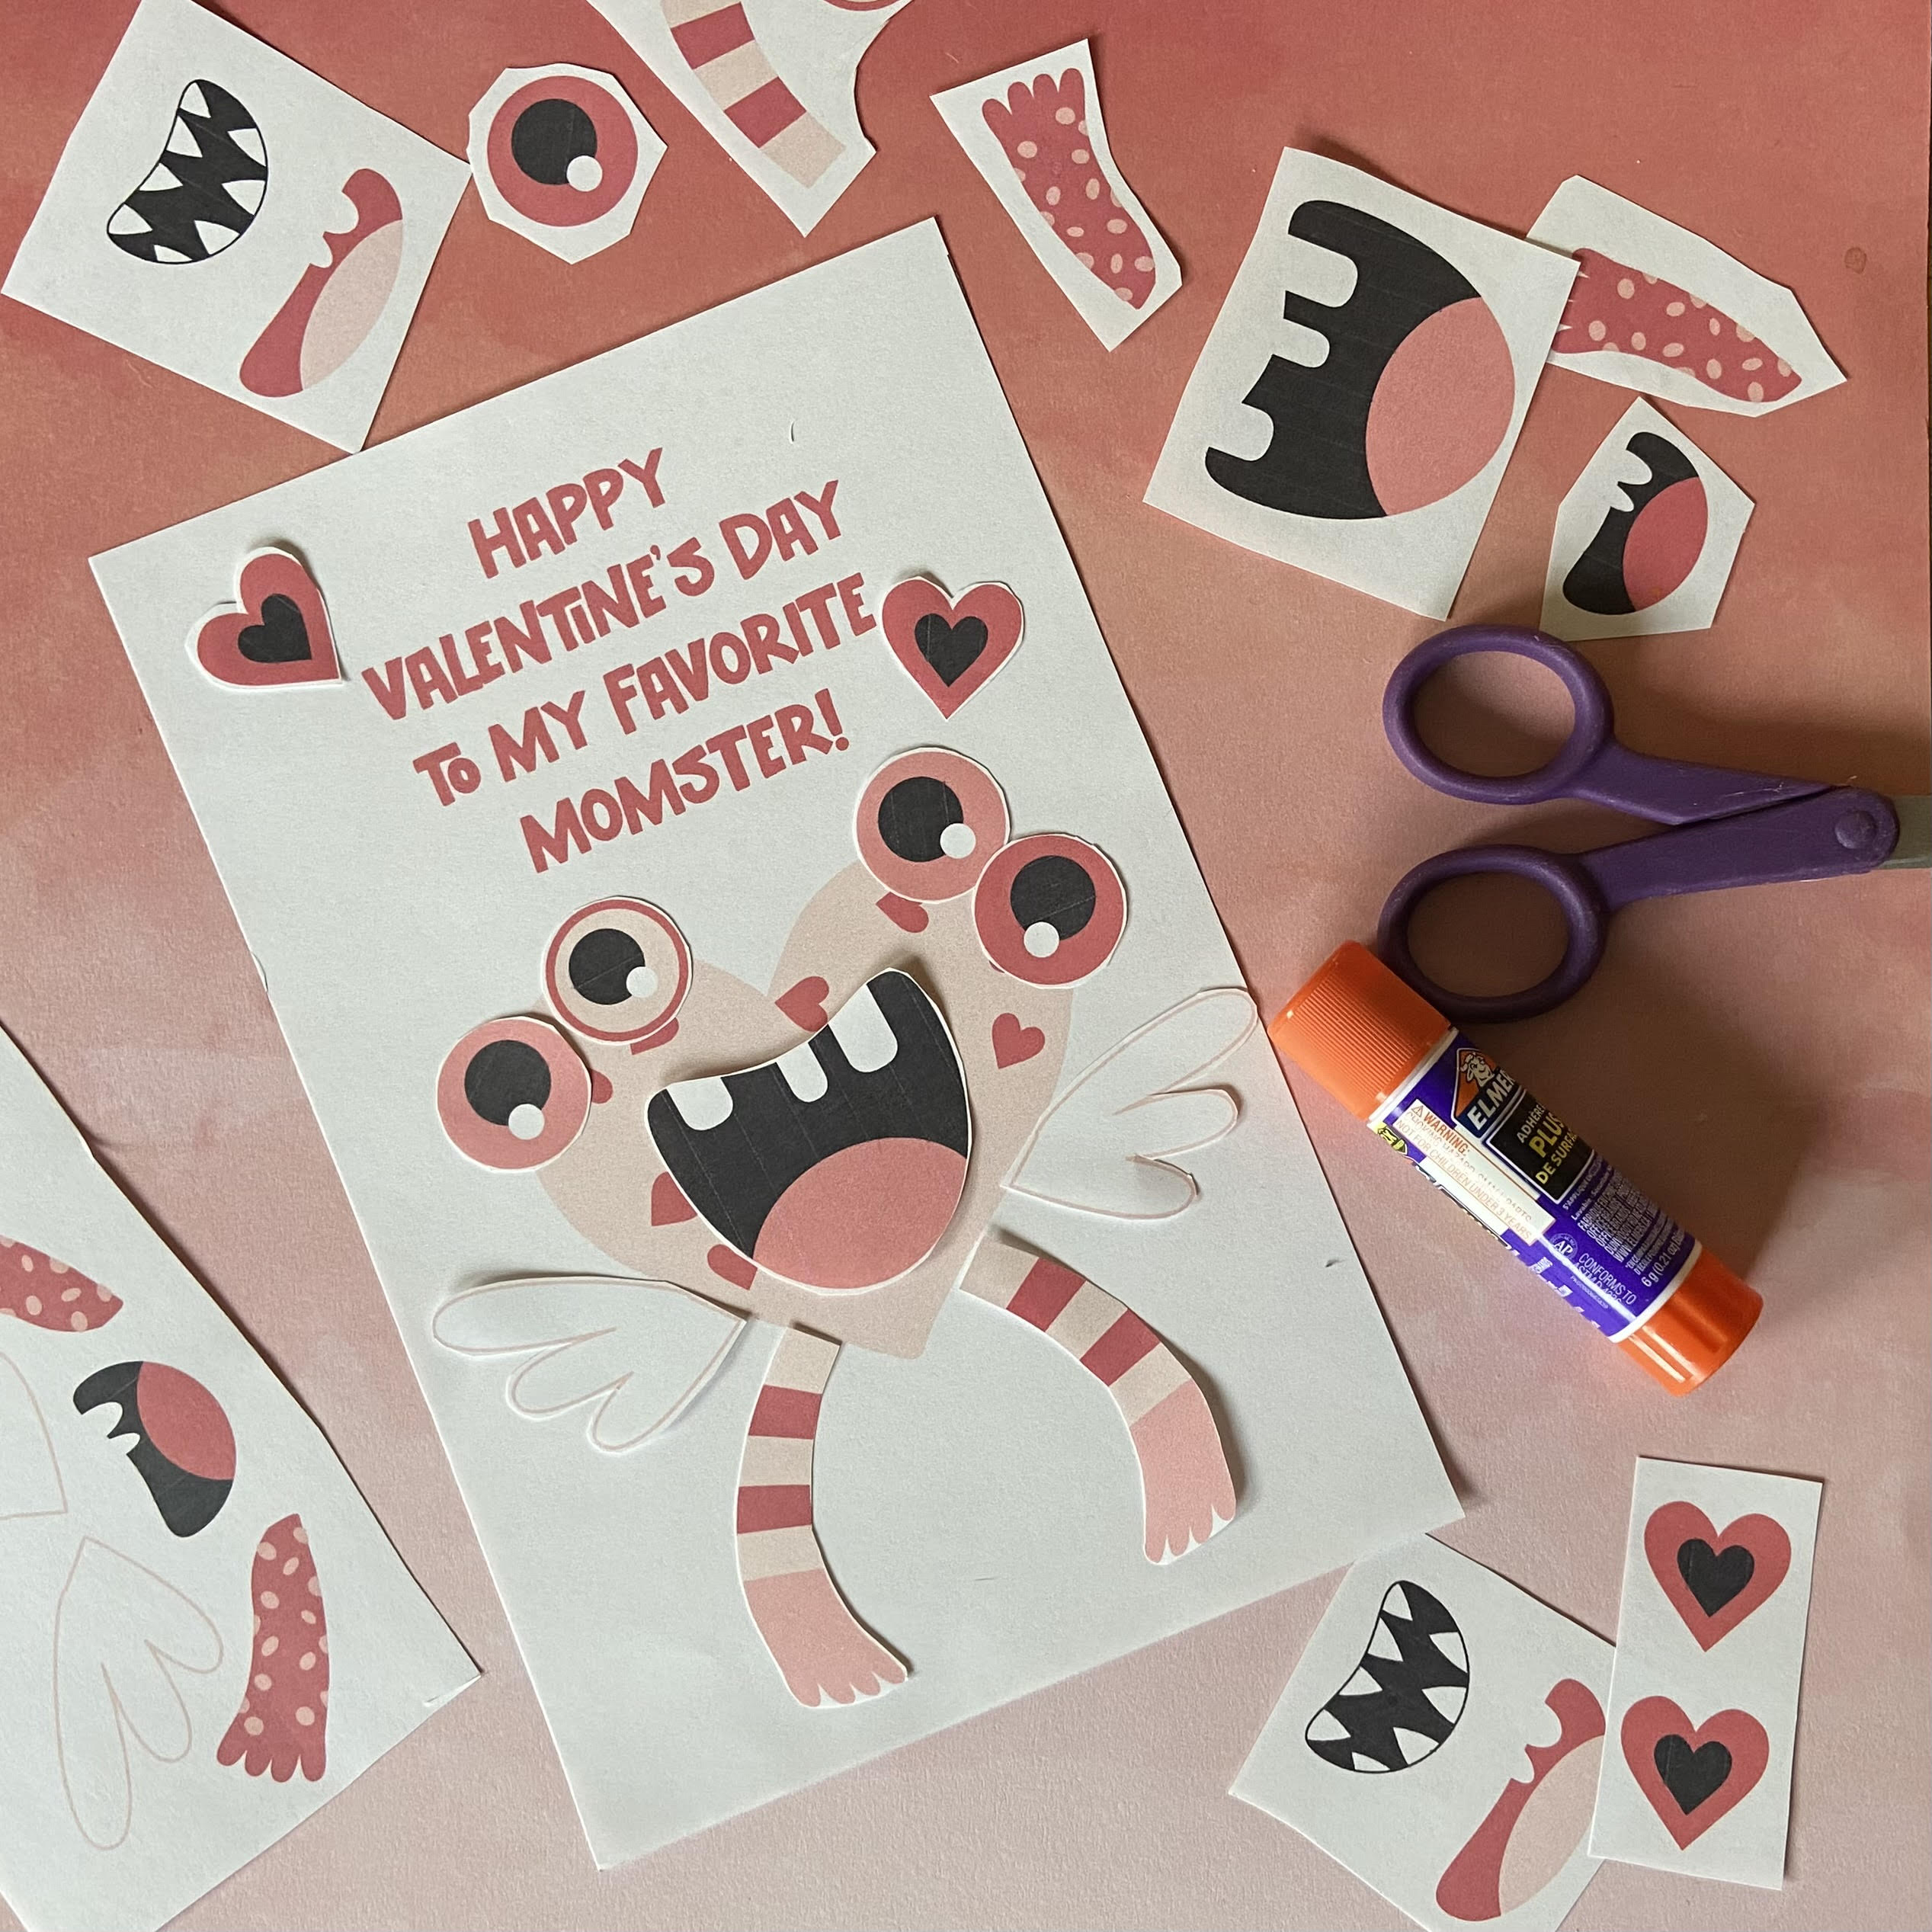 Printable Monster Valentine card for kids to make.